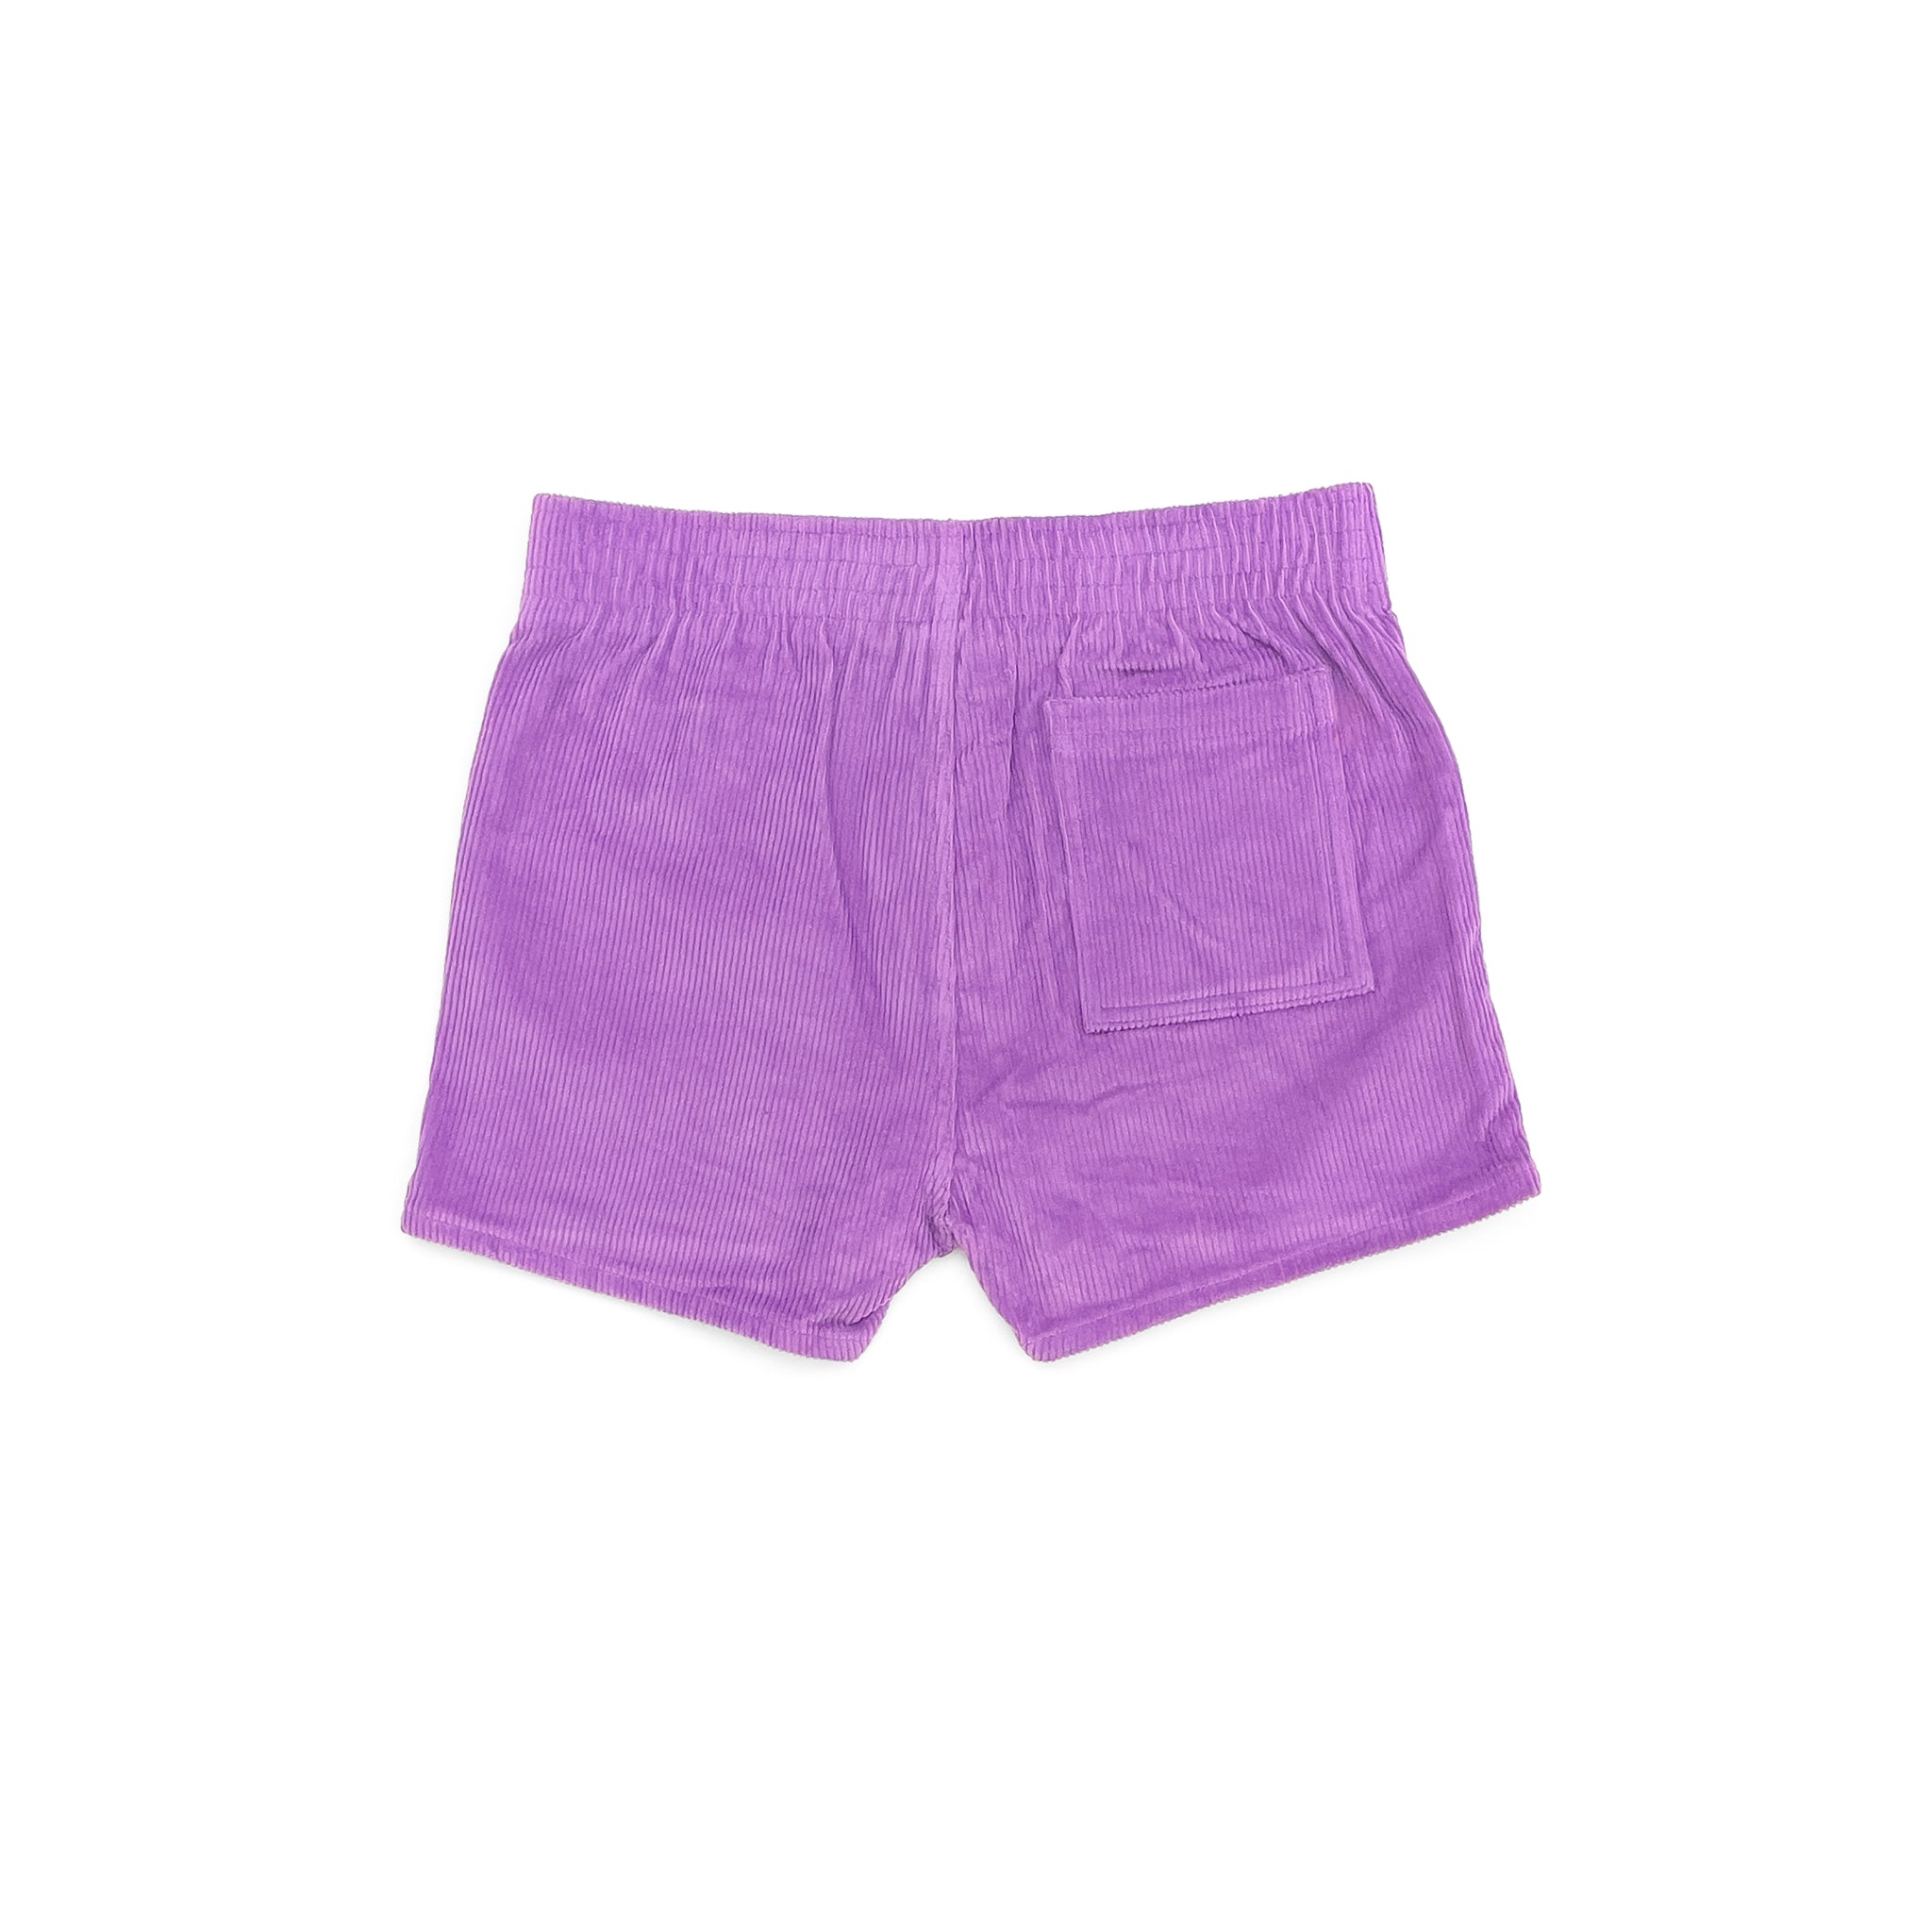 Dreamer Purple Patchwork, Boxer Briefs for Women, Girls Boxer Shorts